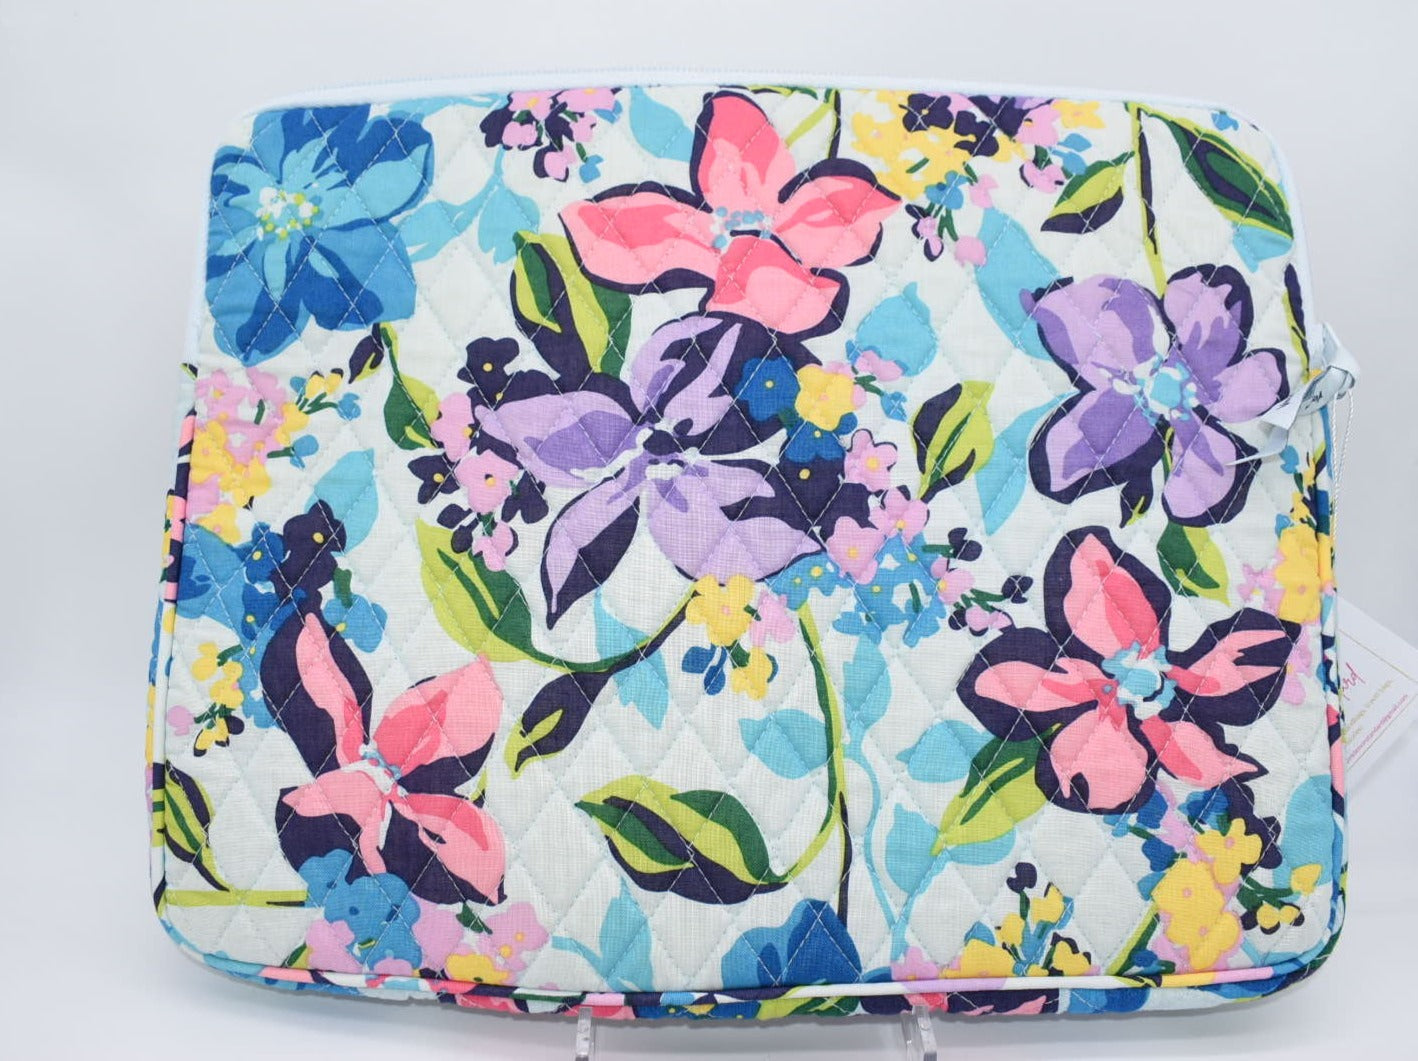 Vera Bradley 14" Laptop Soft Case in "Marian Floral" Pattern